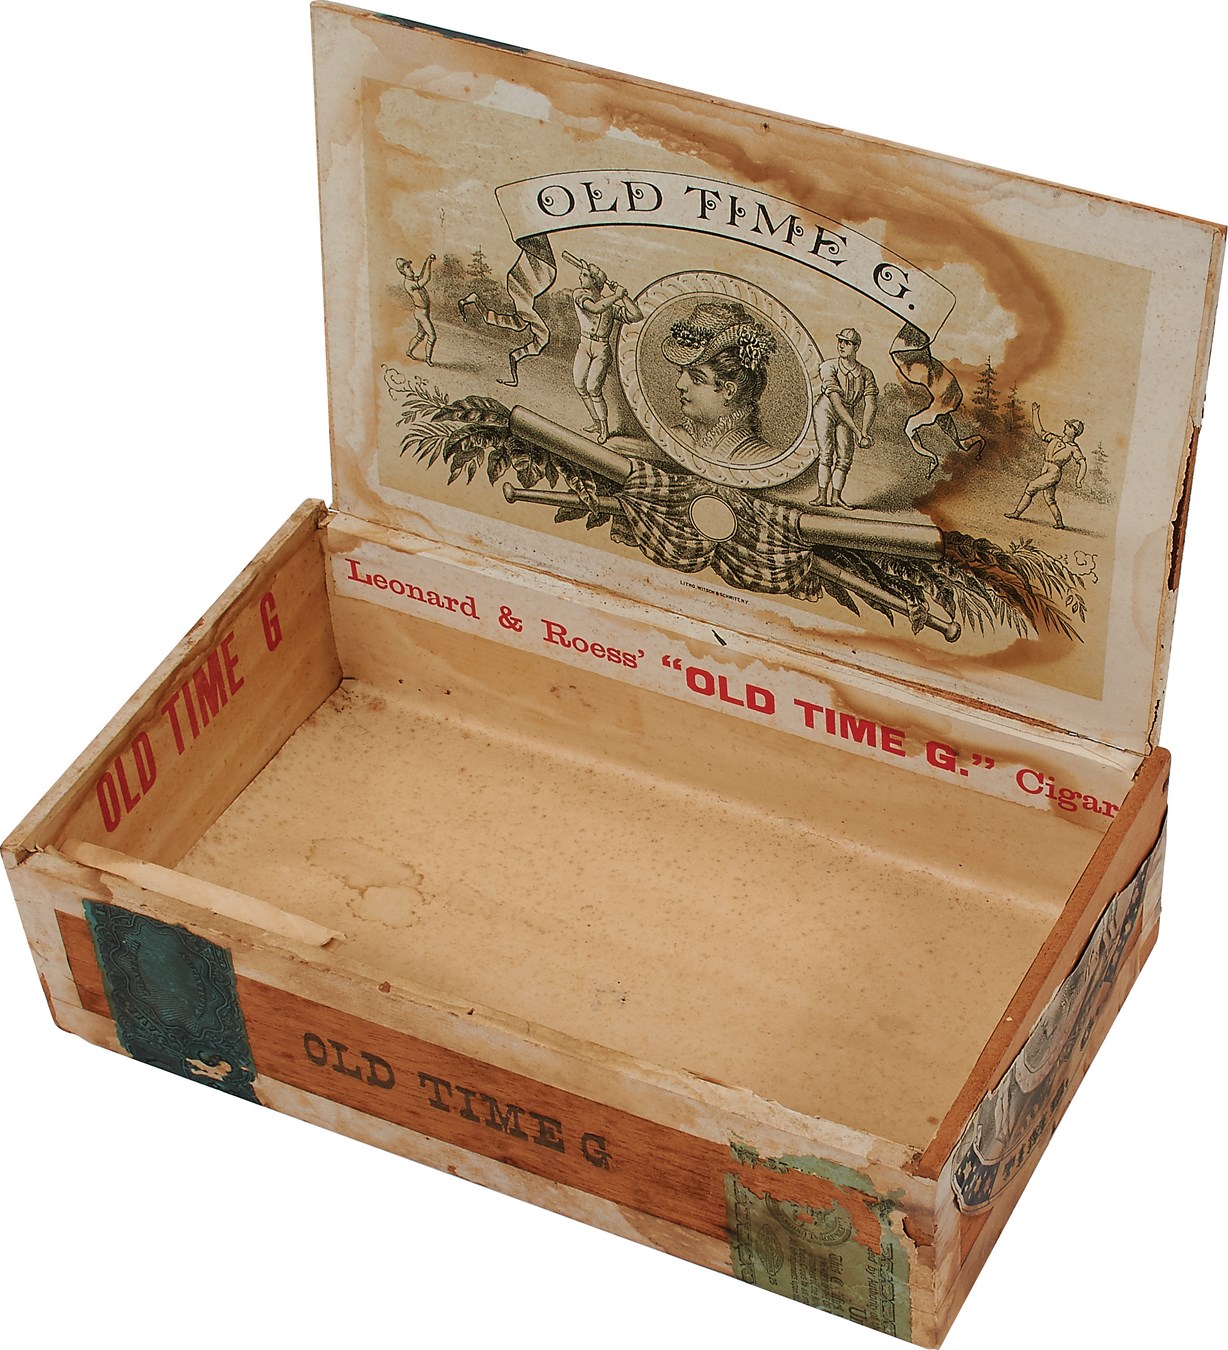 Early Baseball - 1880 "Old Time G" Baseball Cigar Box